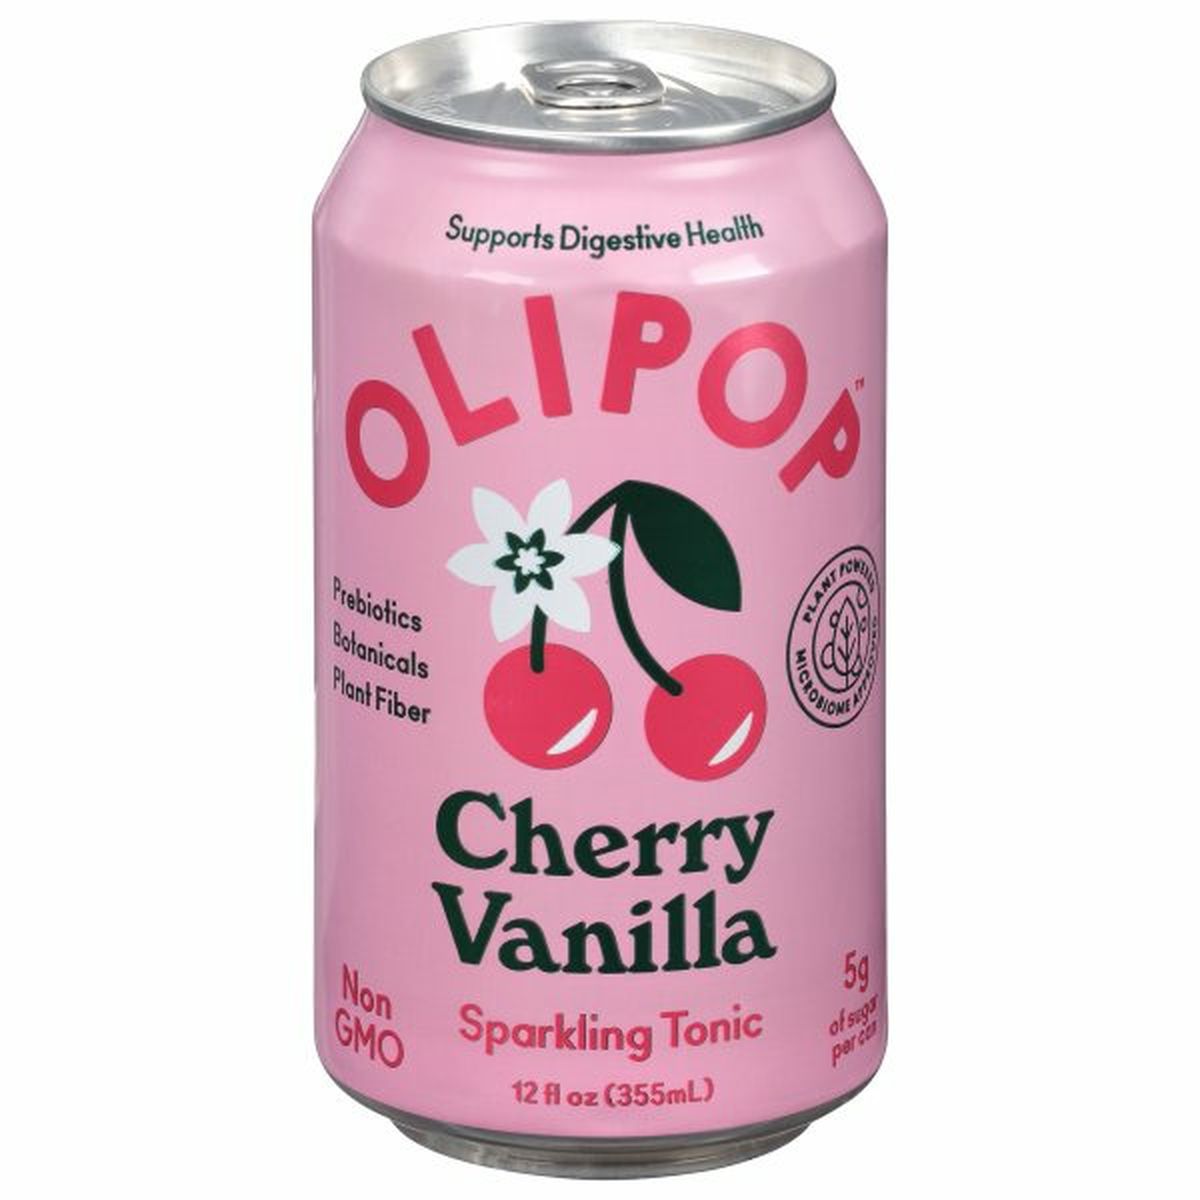 Calories in Olipop Sparkling Tonic, Cherry Vanilla